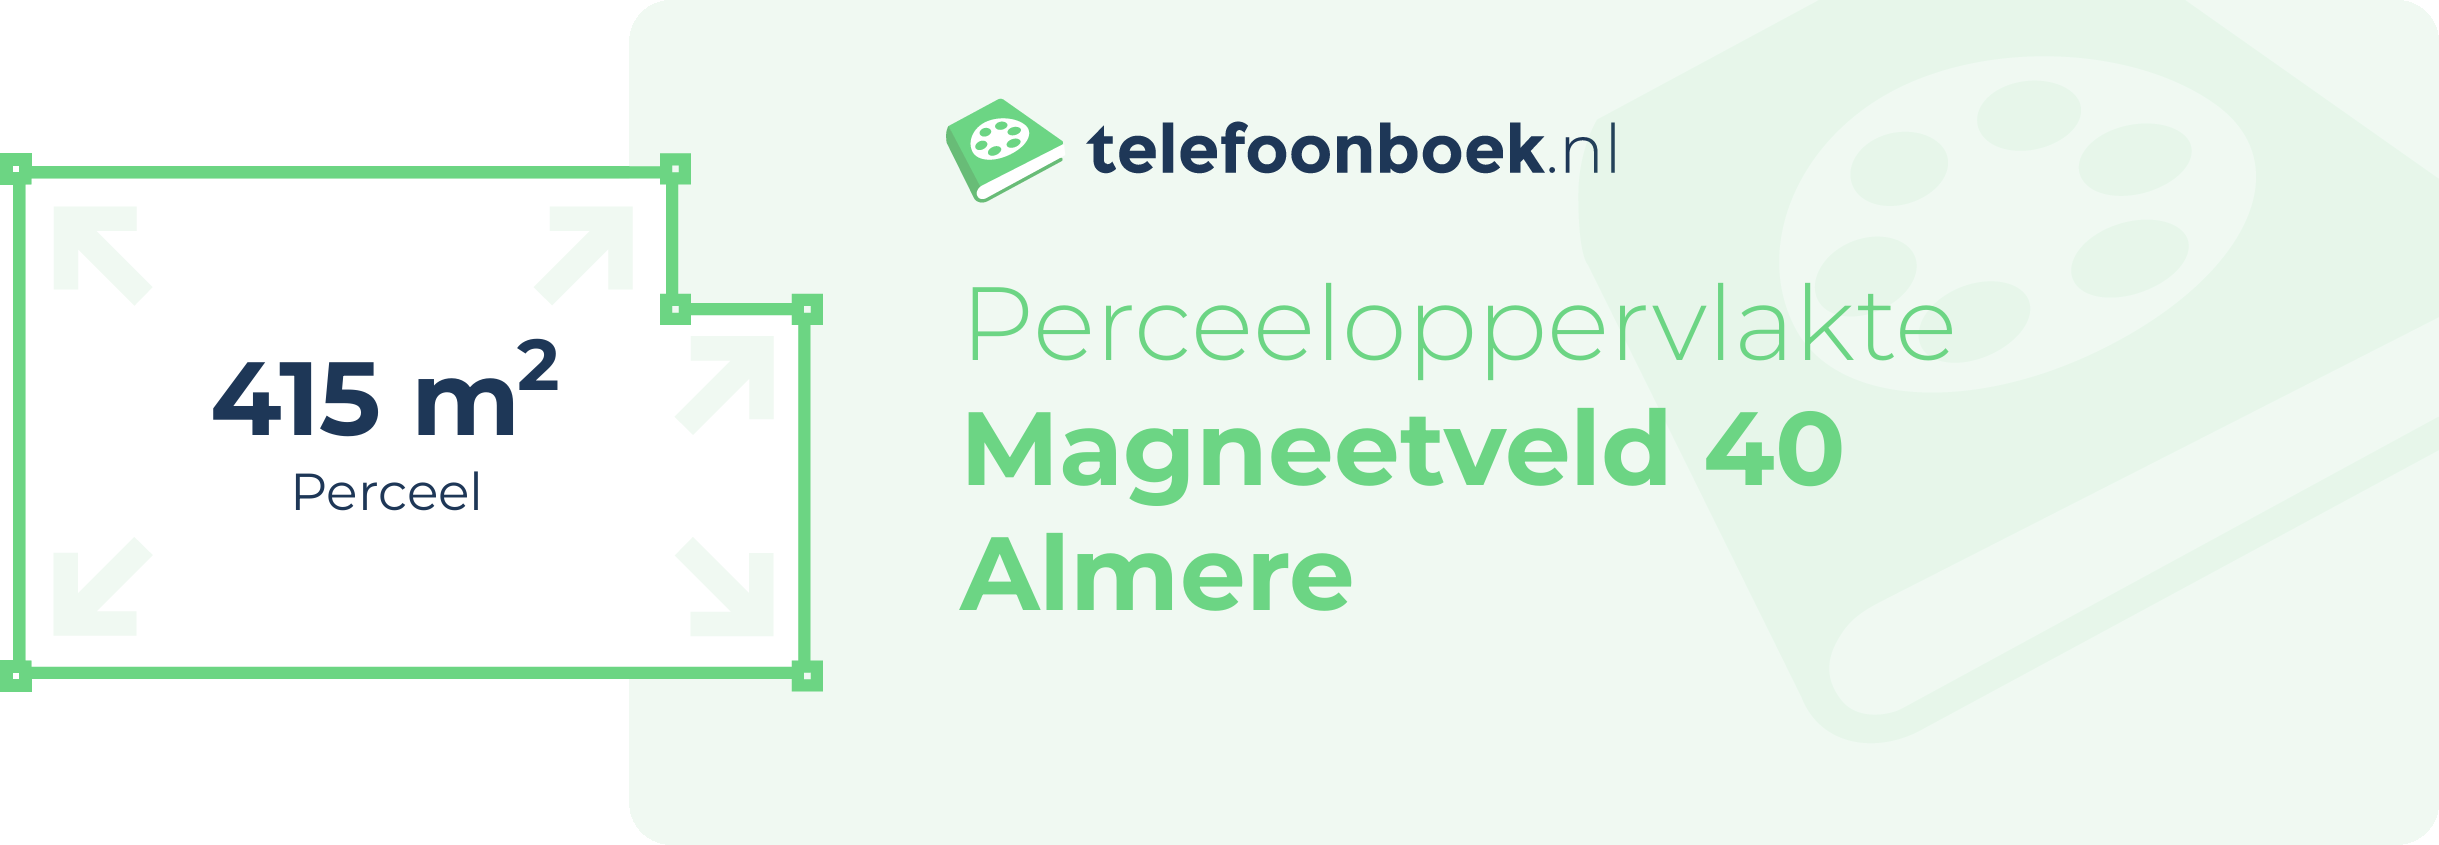 Perceeloppervlakte Magneetveld 40 Almere